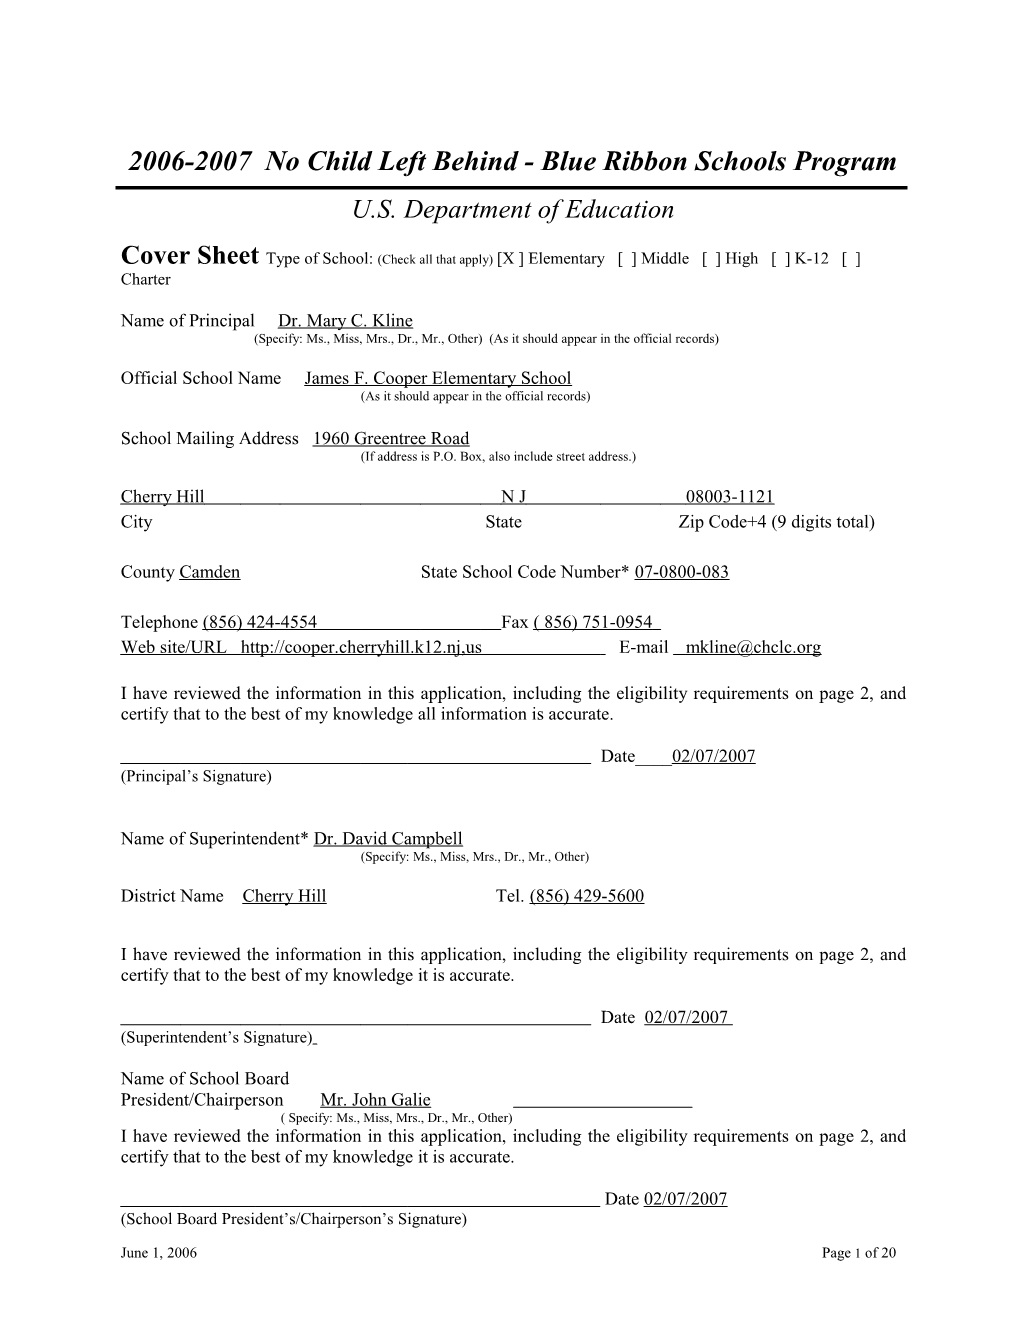 Application: 2006-2007, No Child Left Behind - Blue Ribbon Schools Program (MS Word) s7